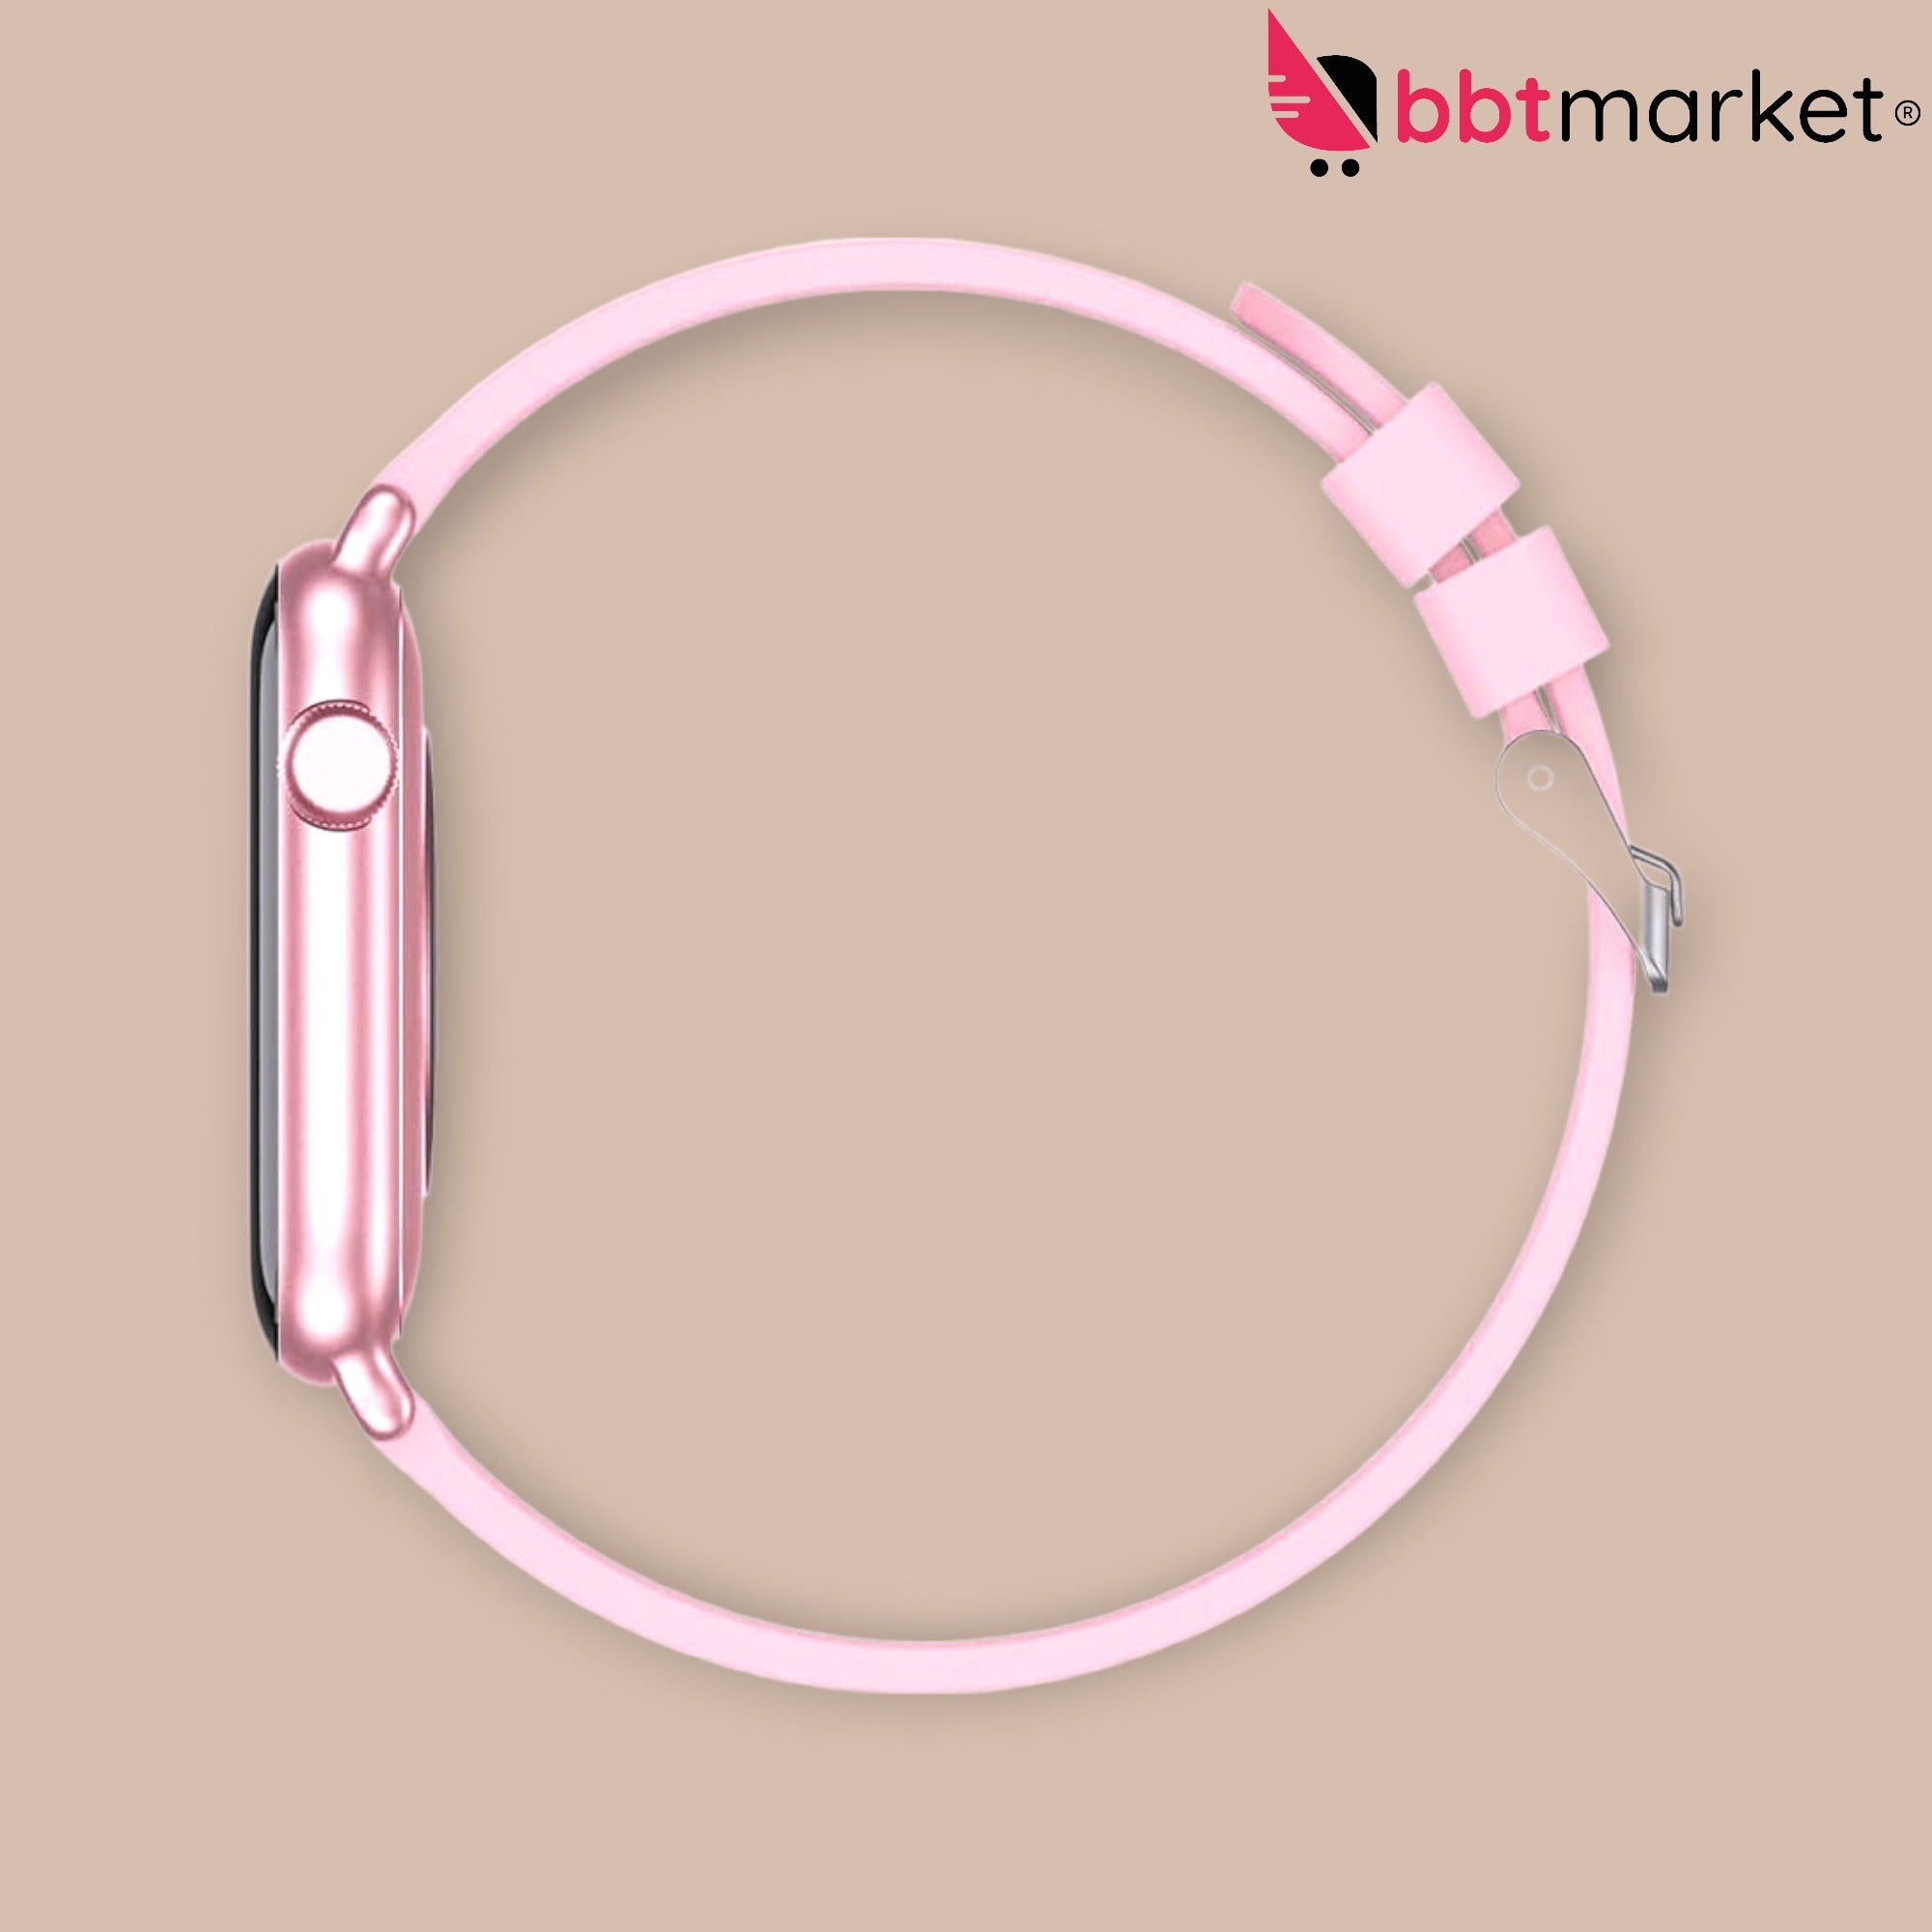 Smartwatch für Damen Herren Fitness Armbanduhr Bluetooth-Anruf 1.3 Touchscreen